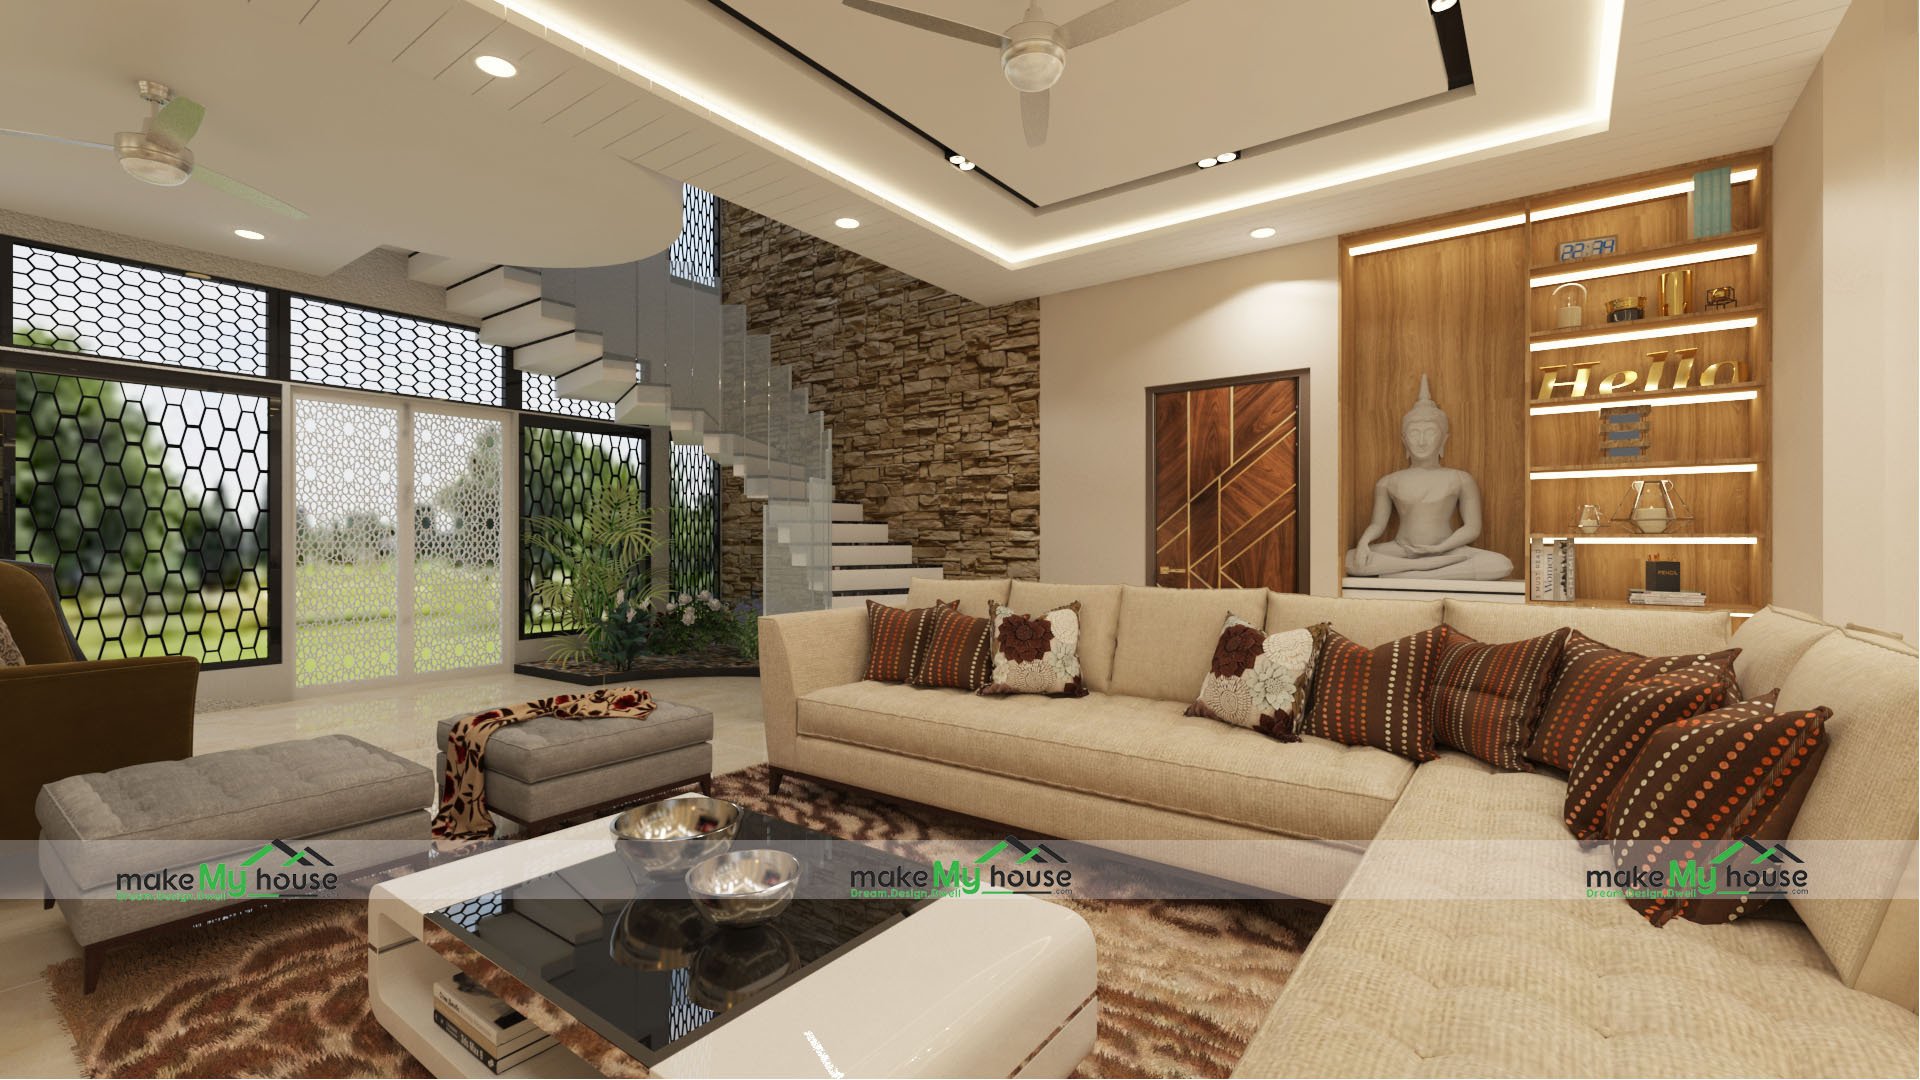 Transform Your Home with Interior Design